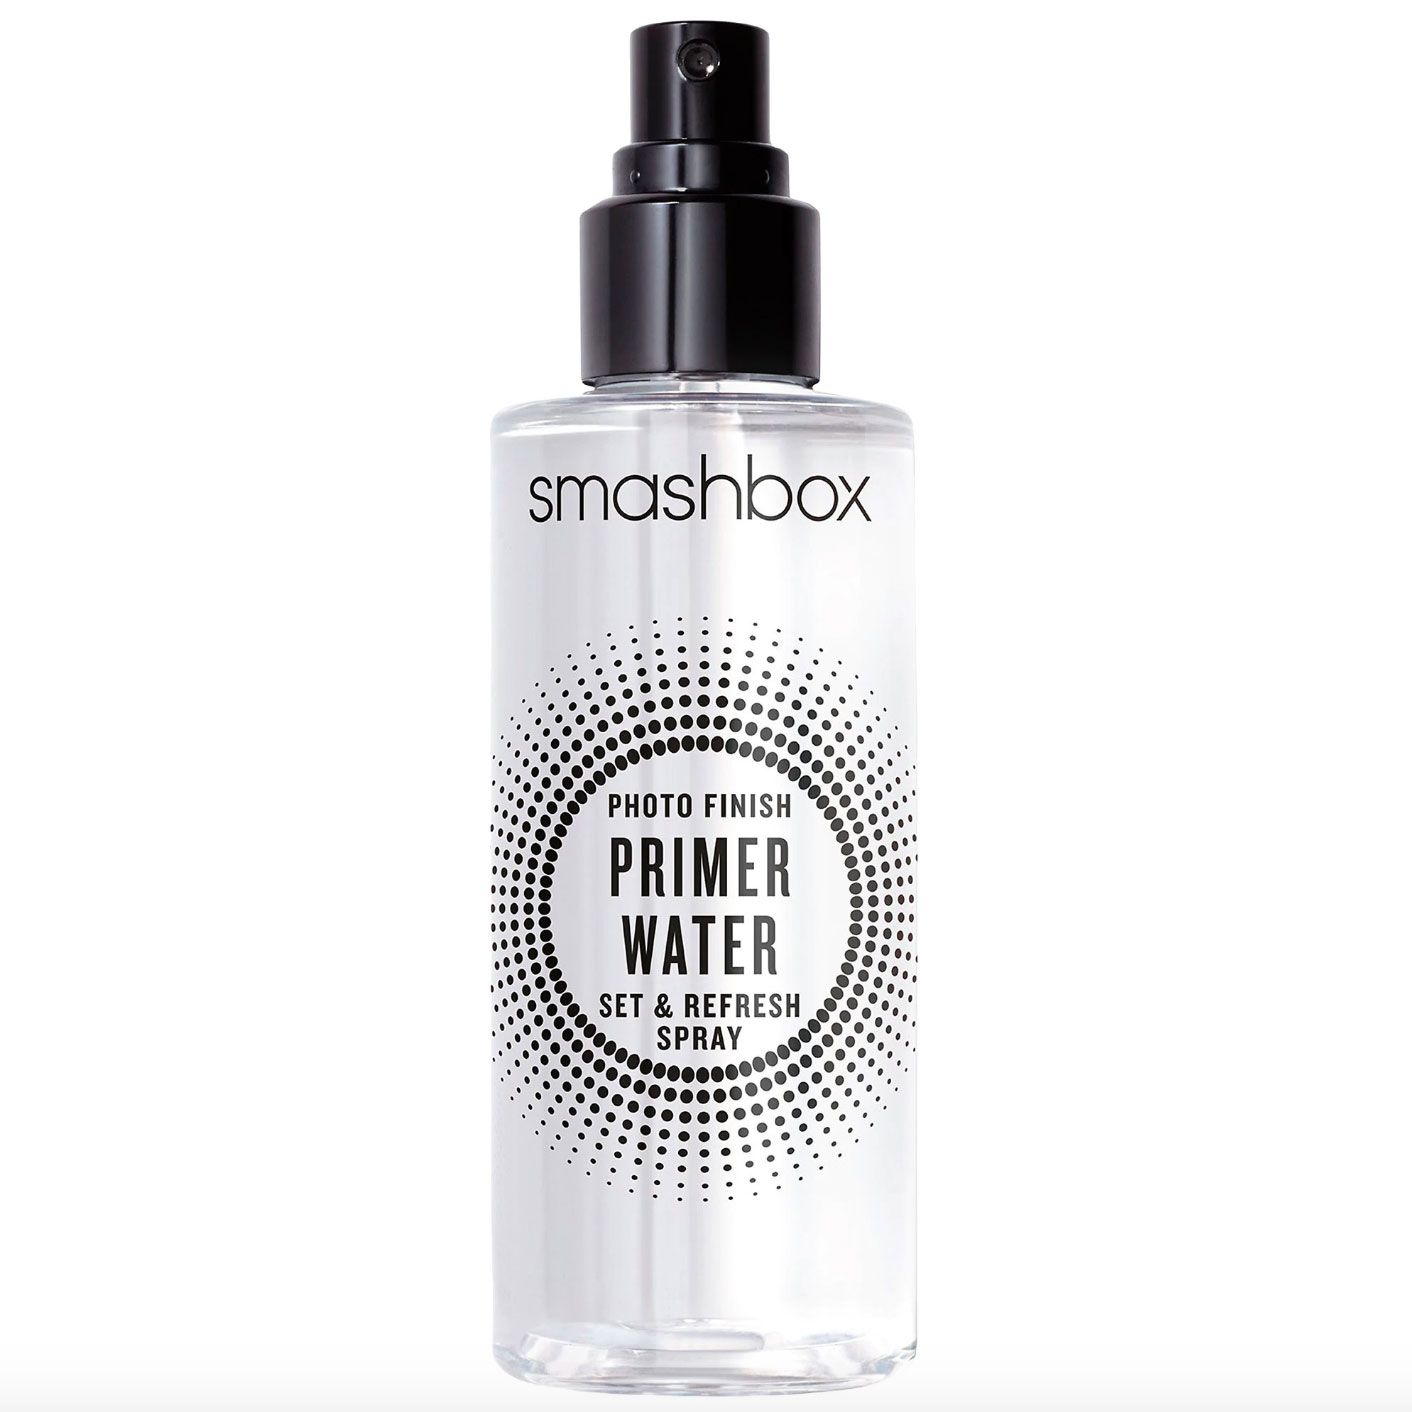 Smashbox_Primer_Water